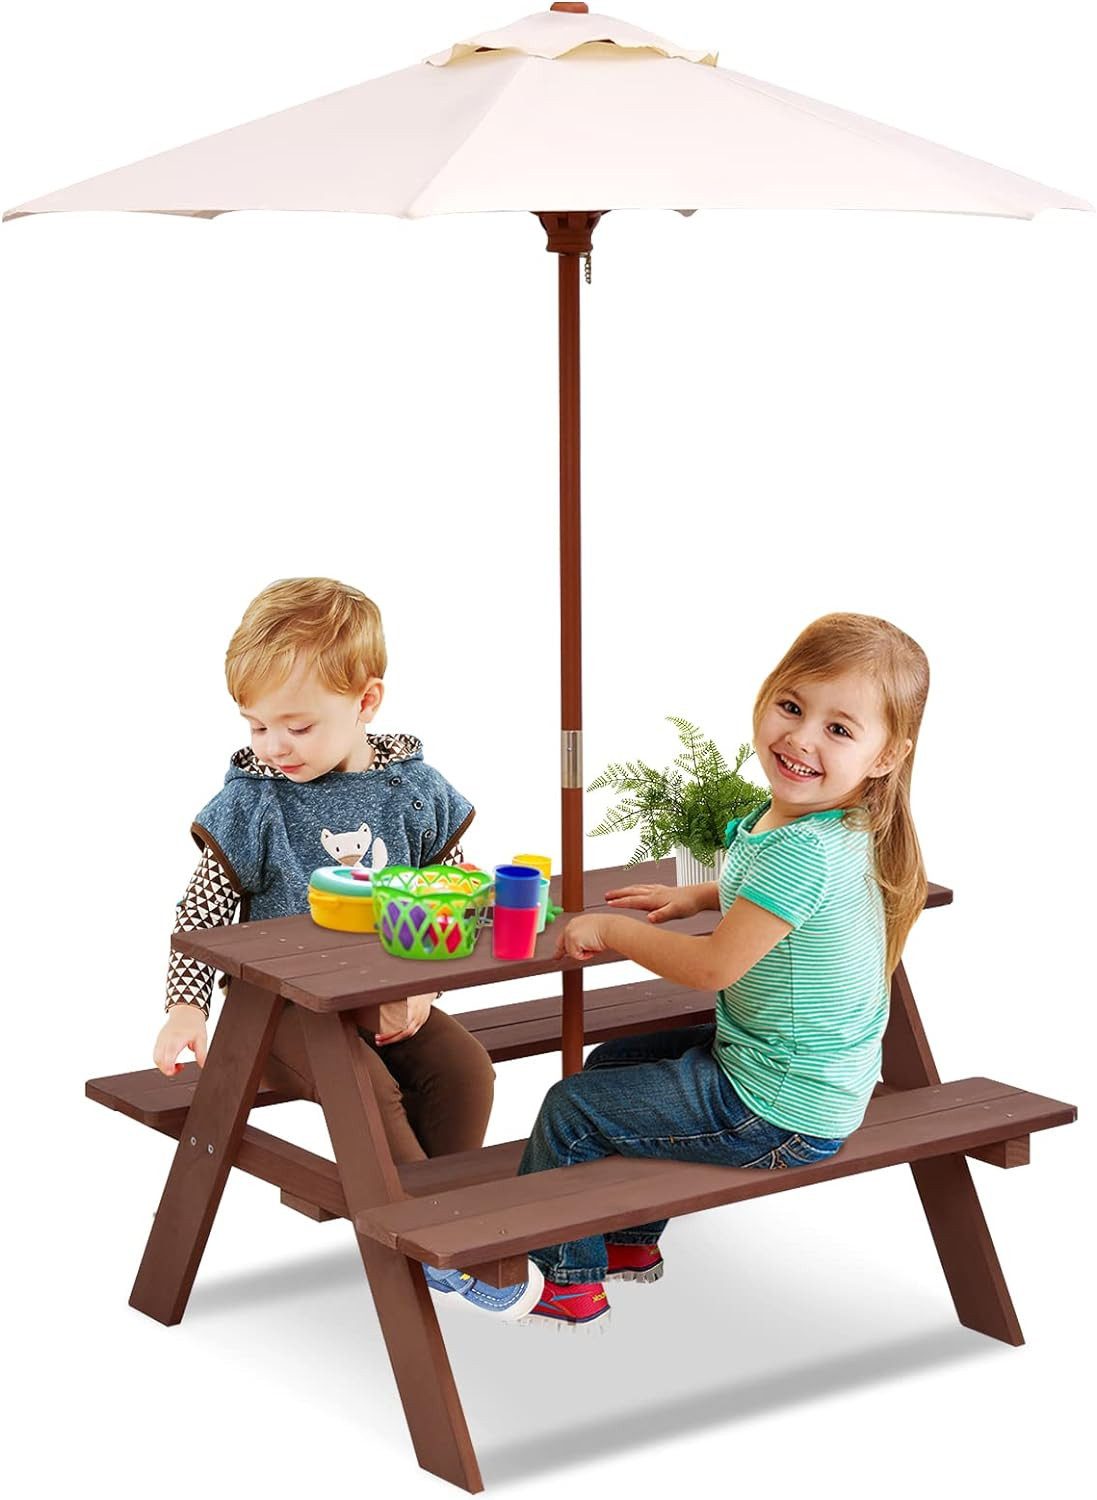 COSTWAY Garten-Kindersitzgruppe, mit abnehmbarem Sonnenschirm, 4 Sitze